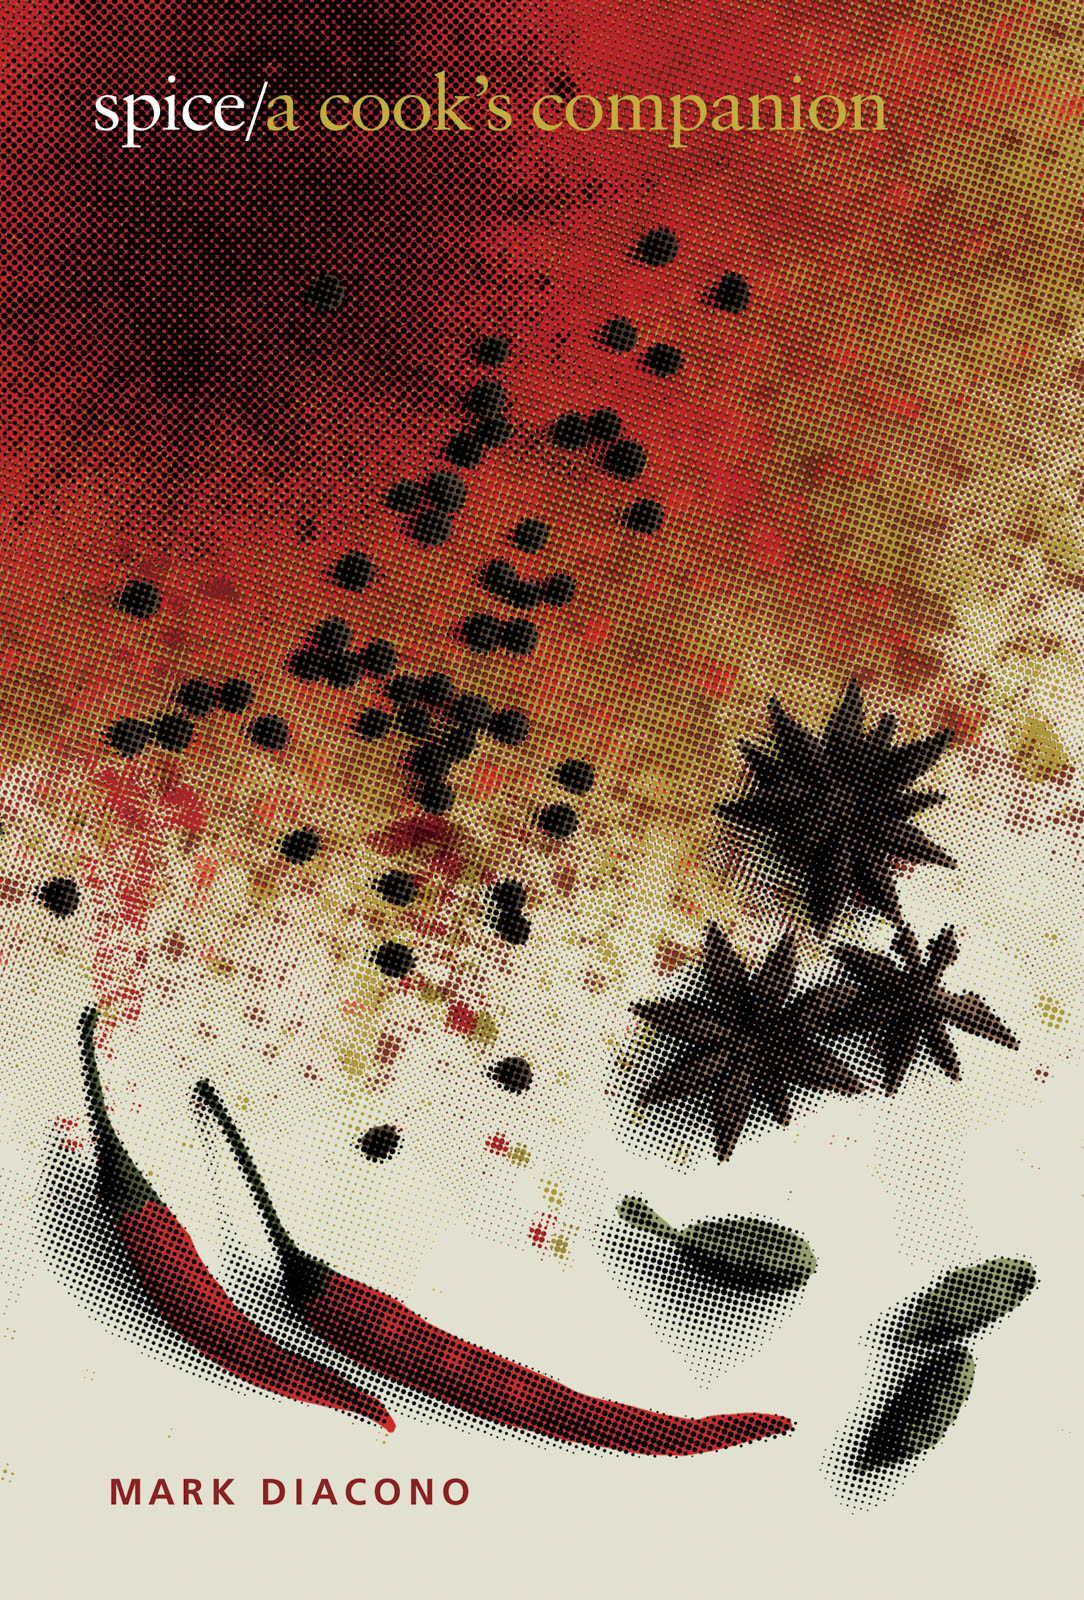 Spice: A Cook's Companion by Mark Diacono